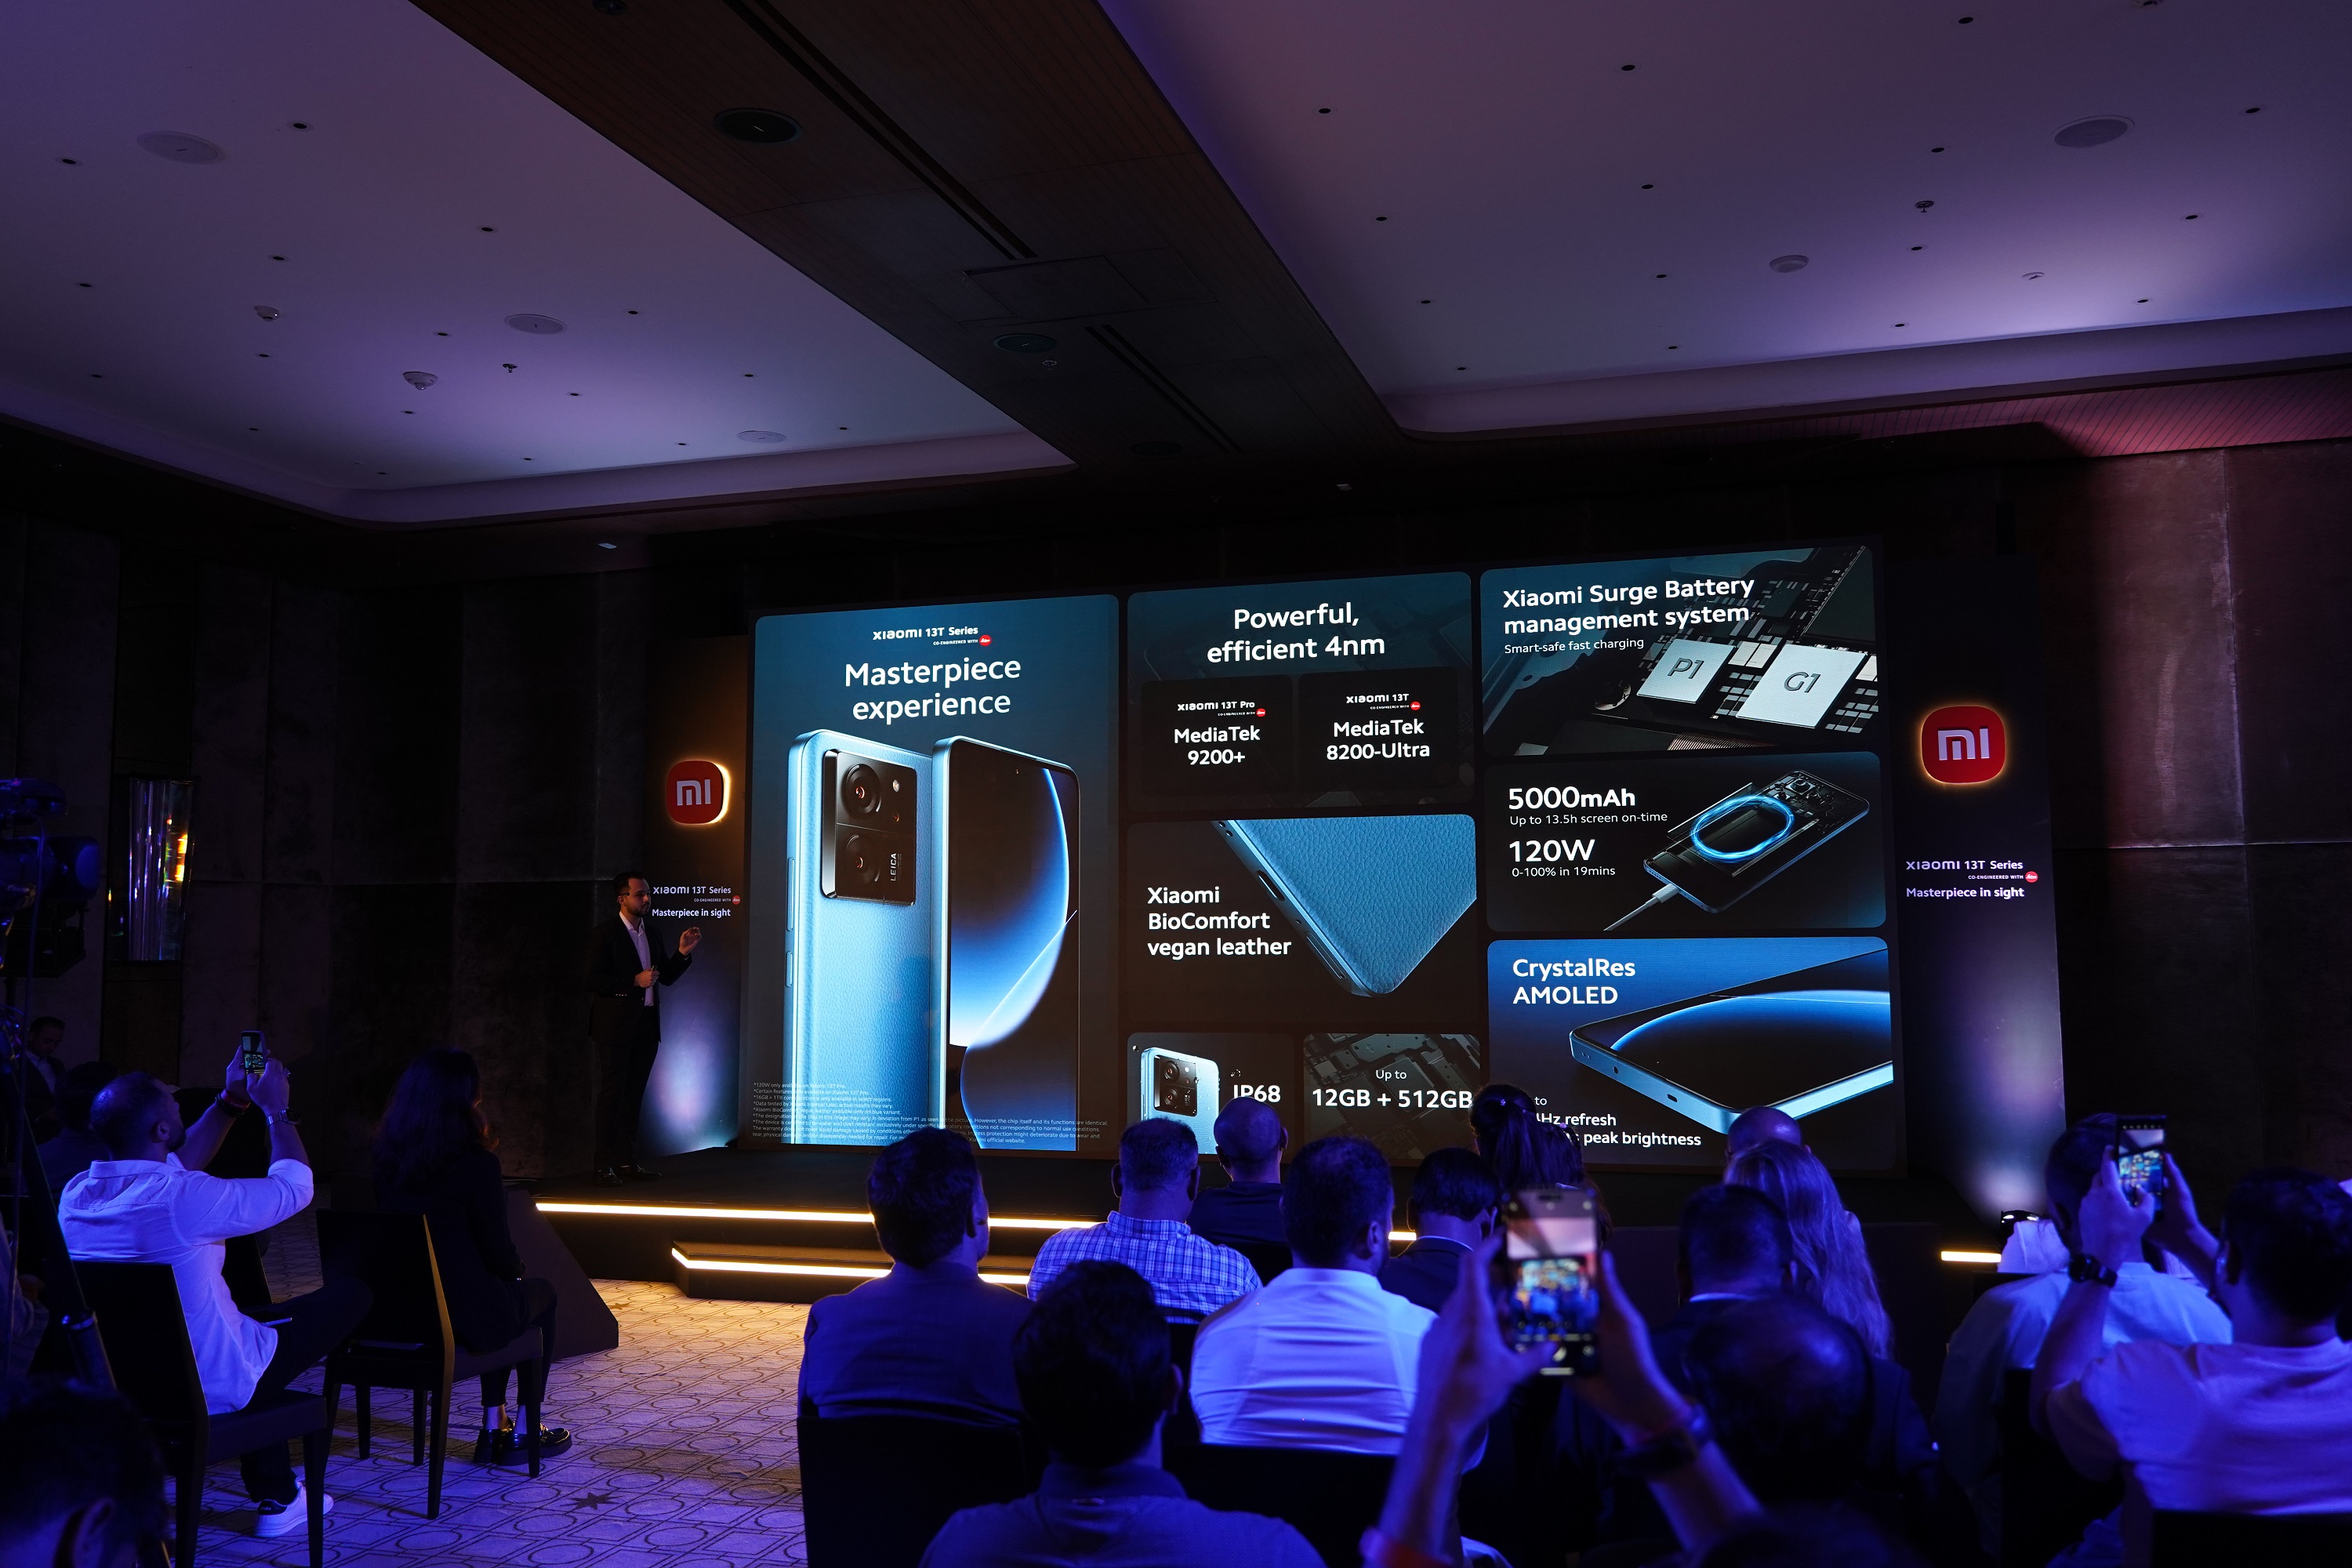 Xiaomi announces global launch of Xiaomi 13T Series